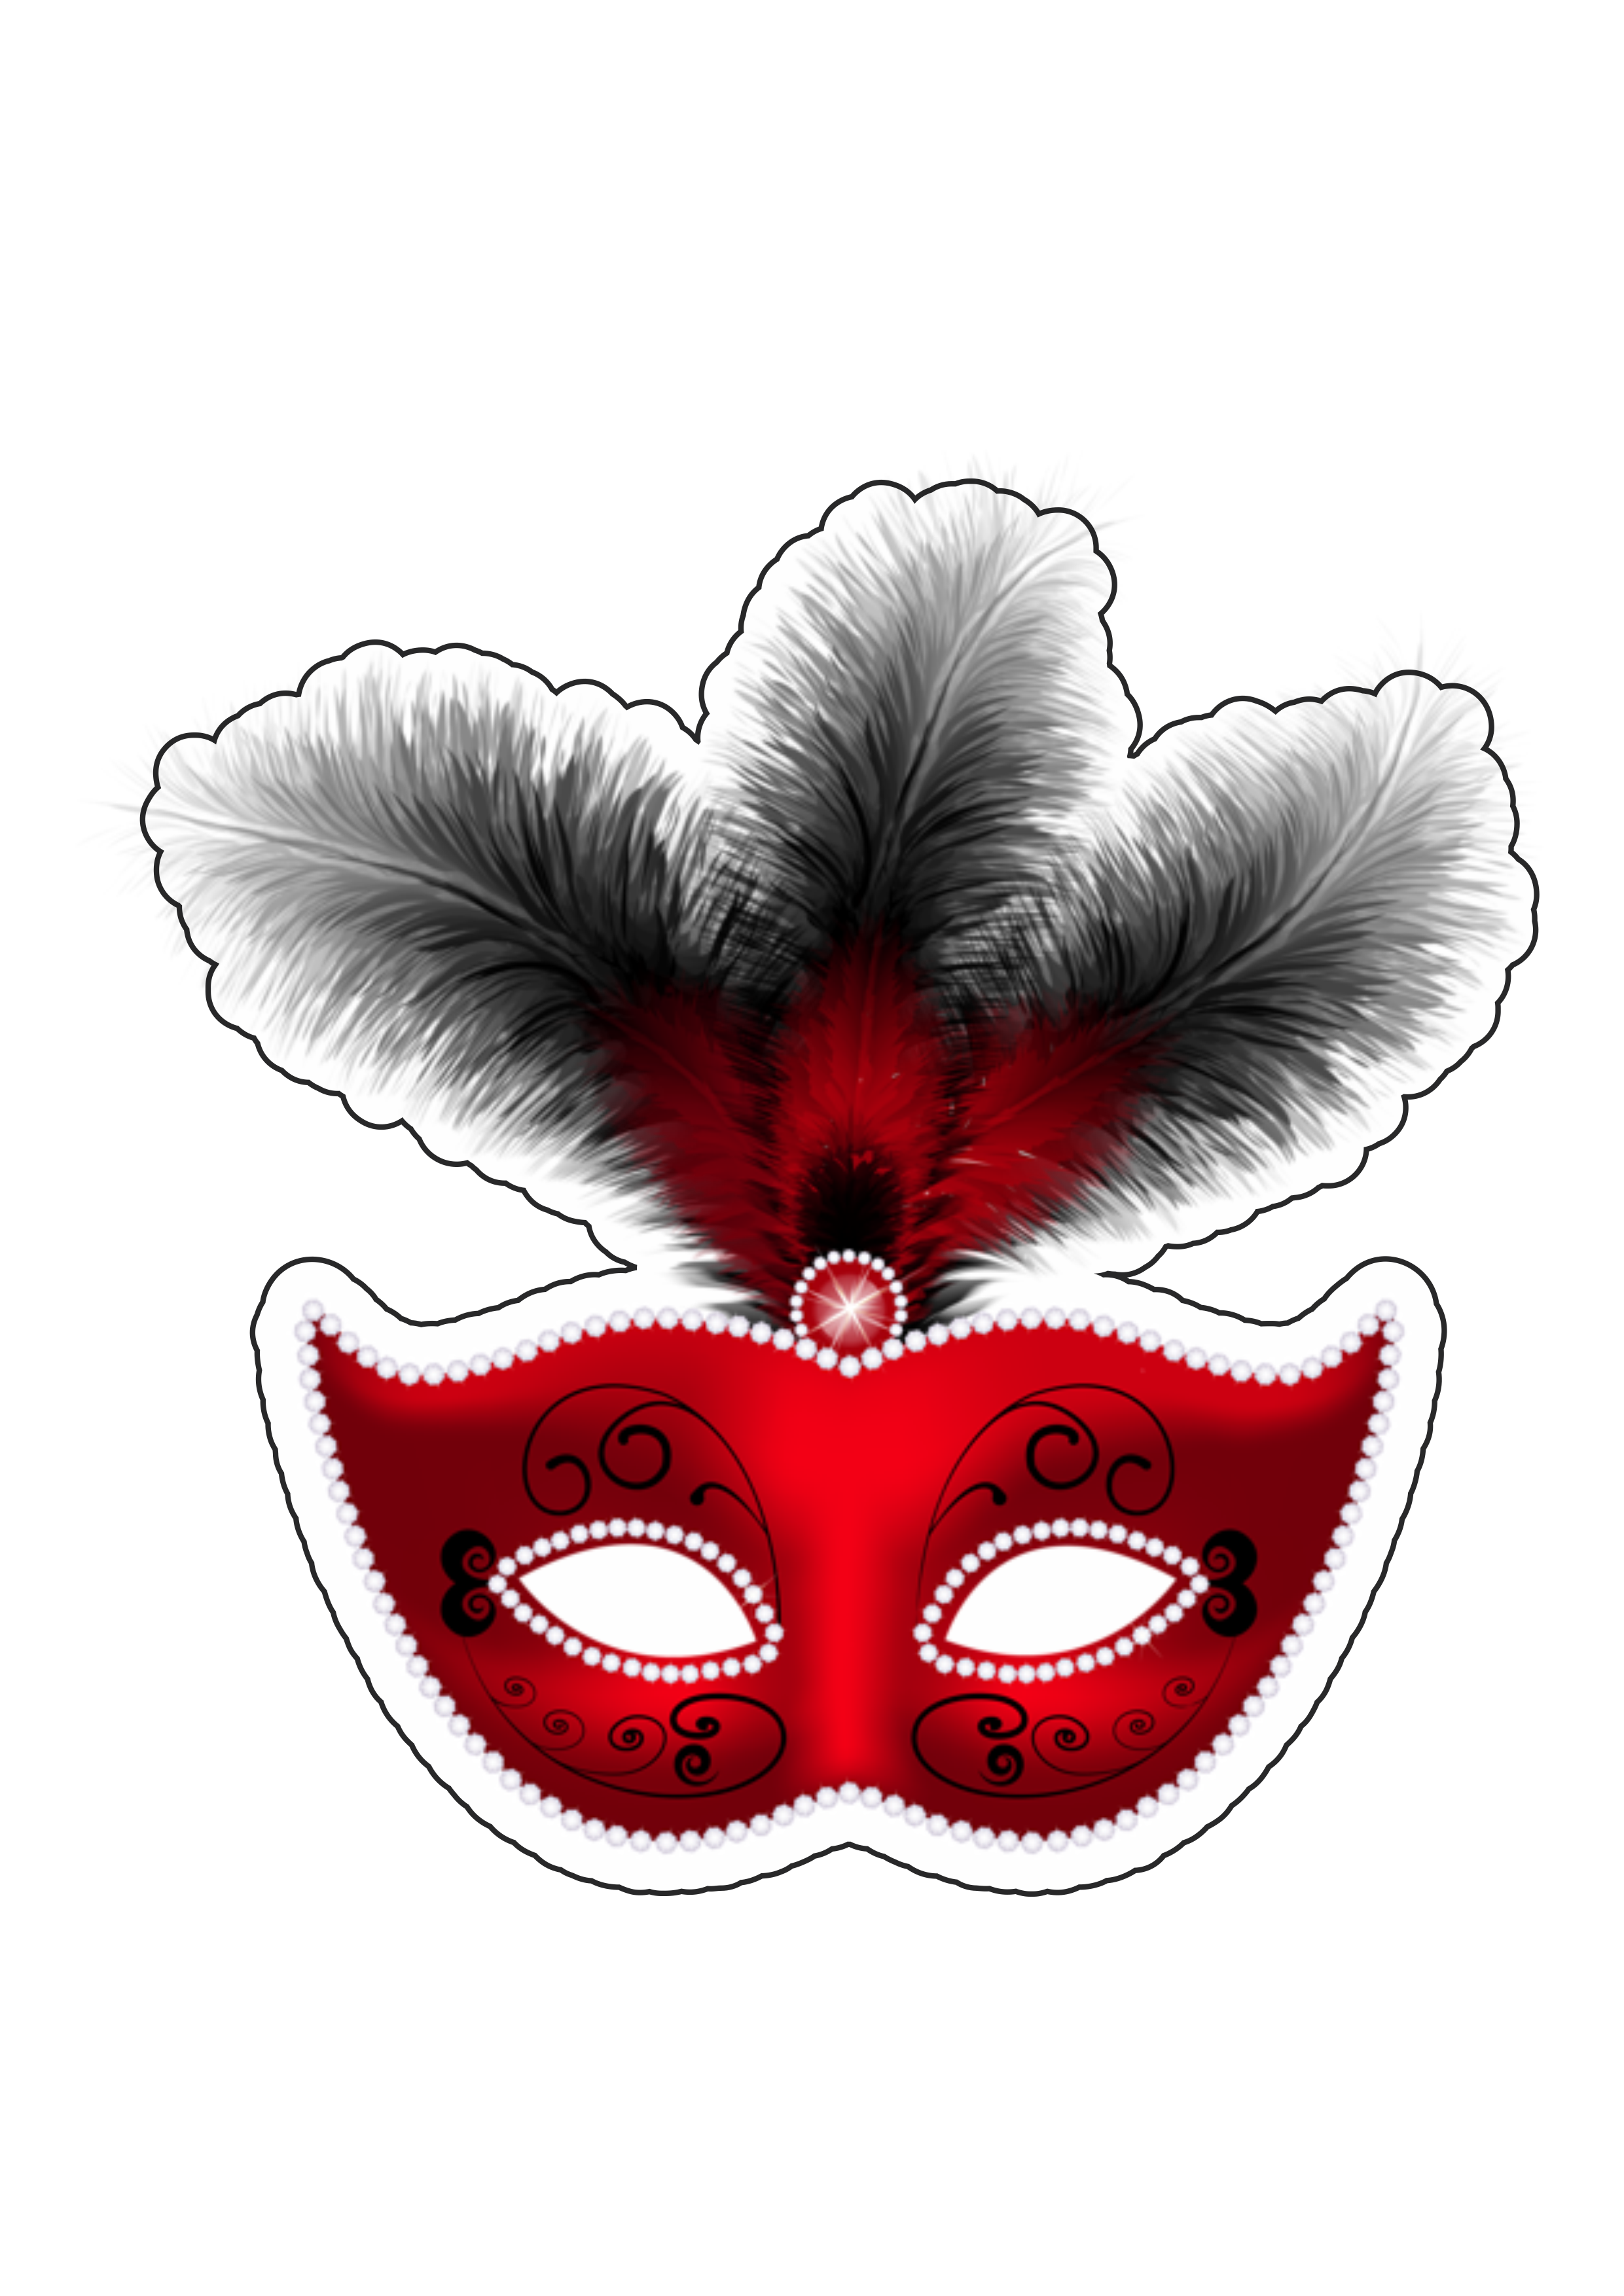 máscara carnaval 2022 vermelha decorativa png